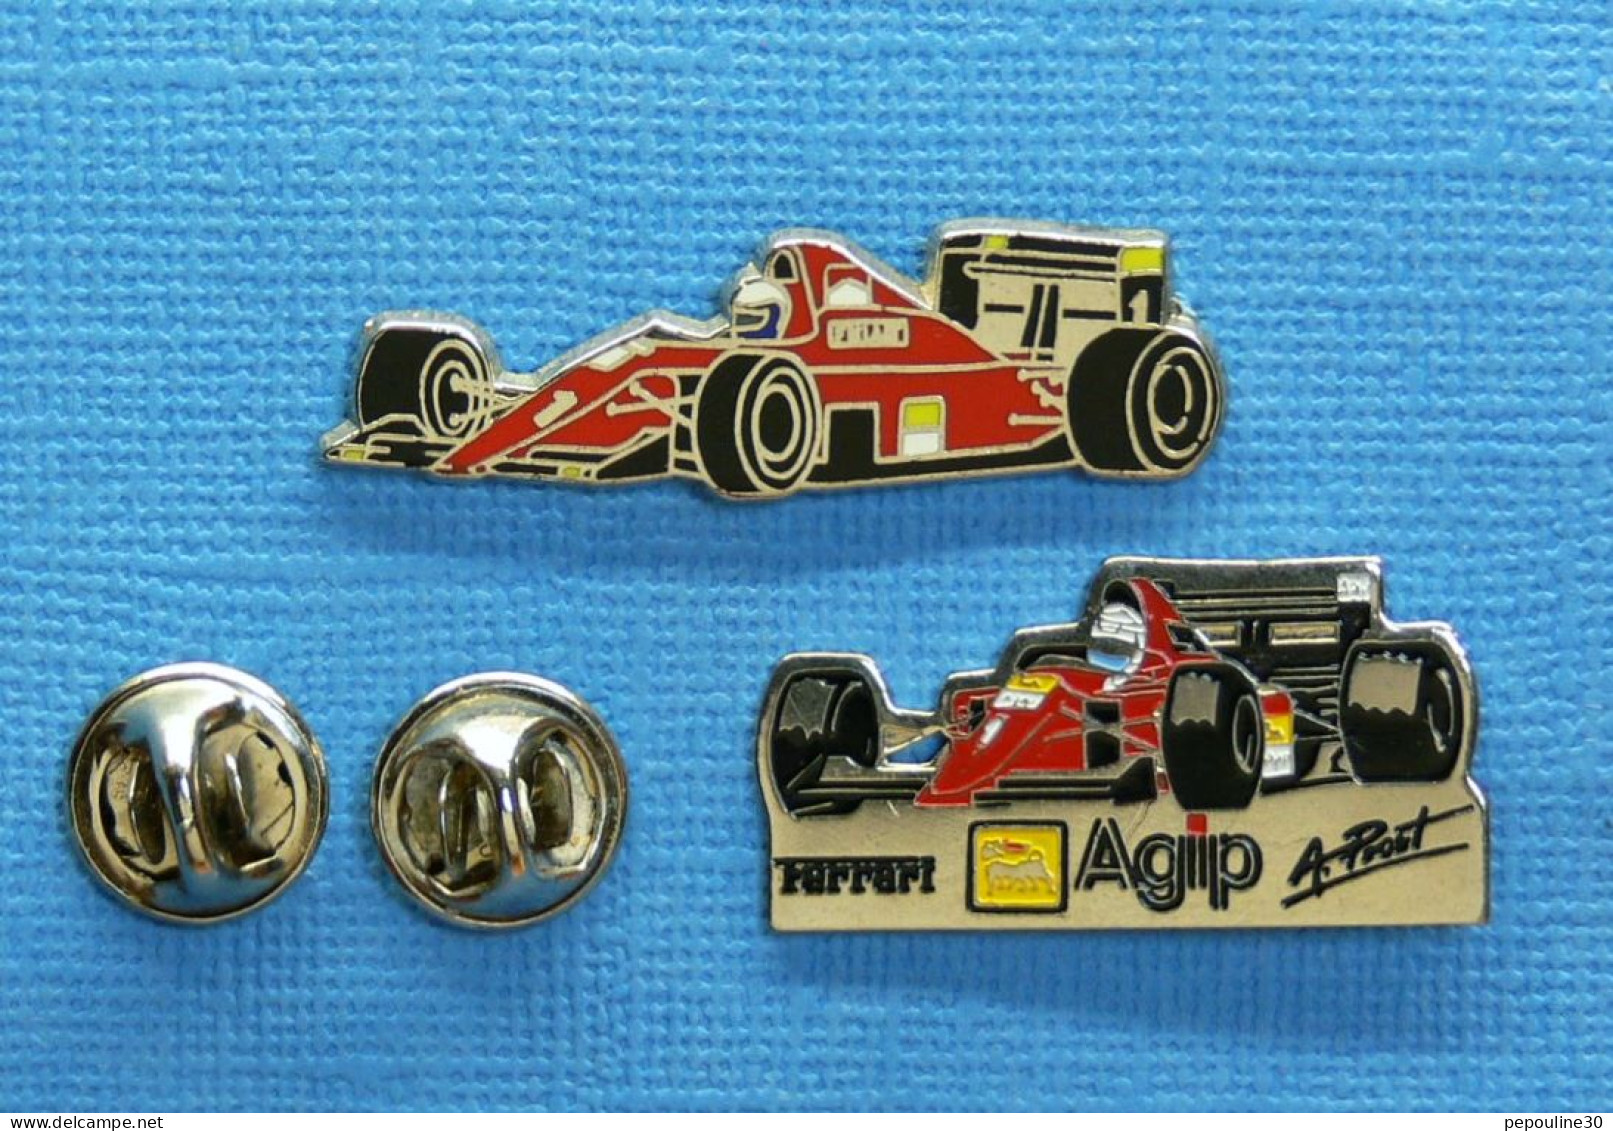 2 PIN'S /  ** FERRARI 642 N°1  AGIP & FERRARI F1-90 ALAIN PROST 19891990 ** . (Locomobile Dimo) - Ferrari